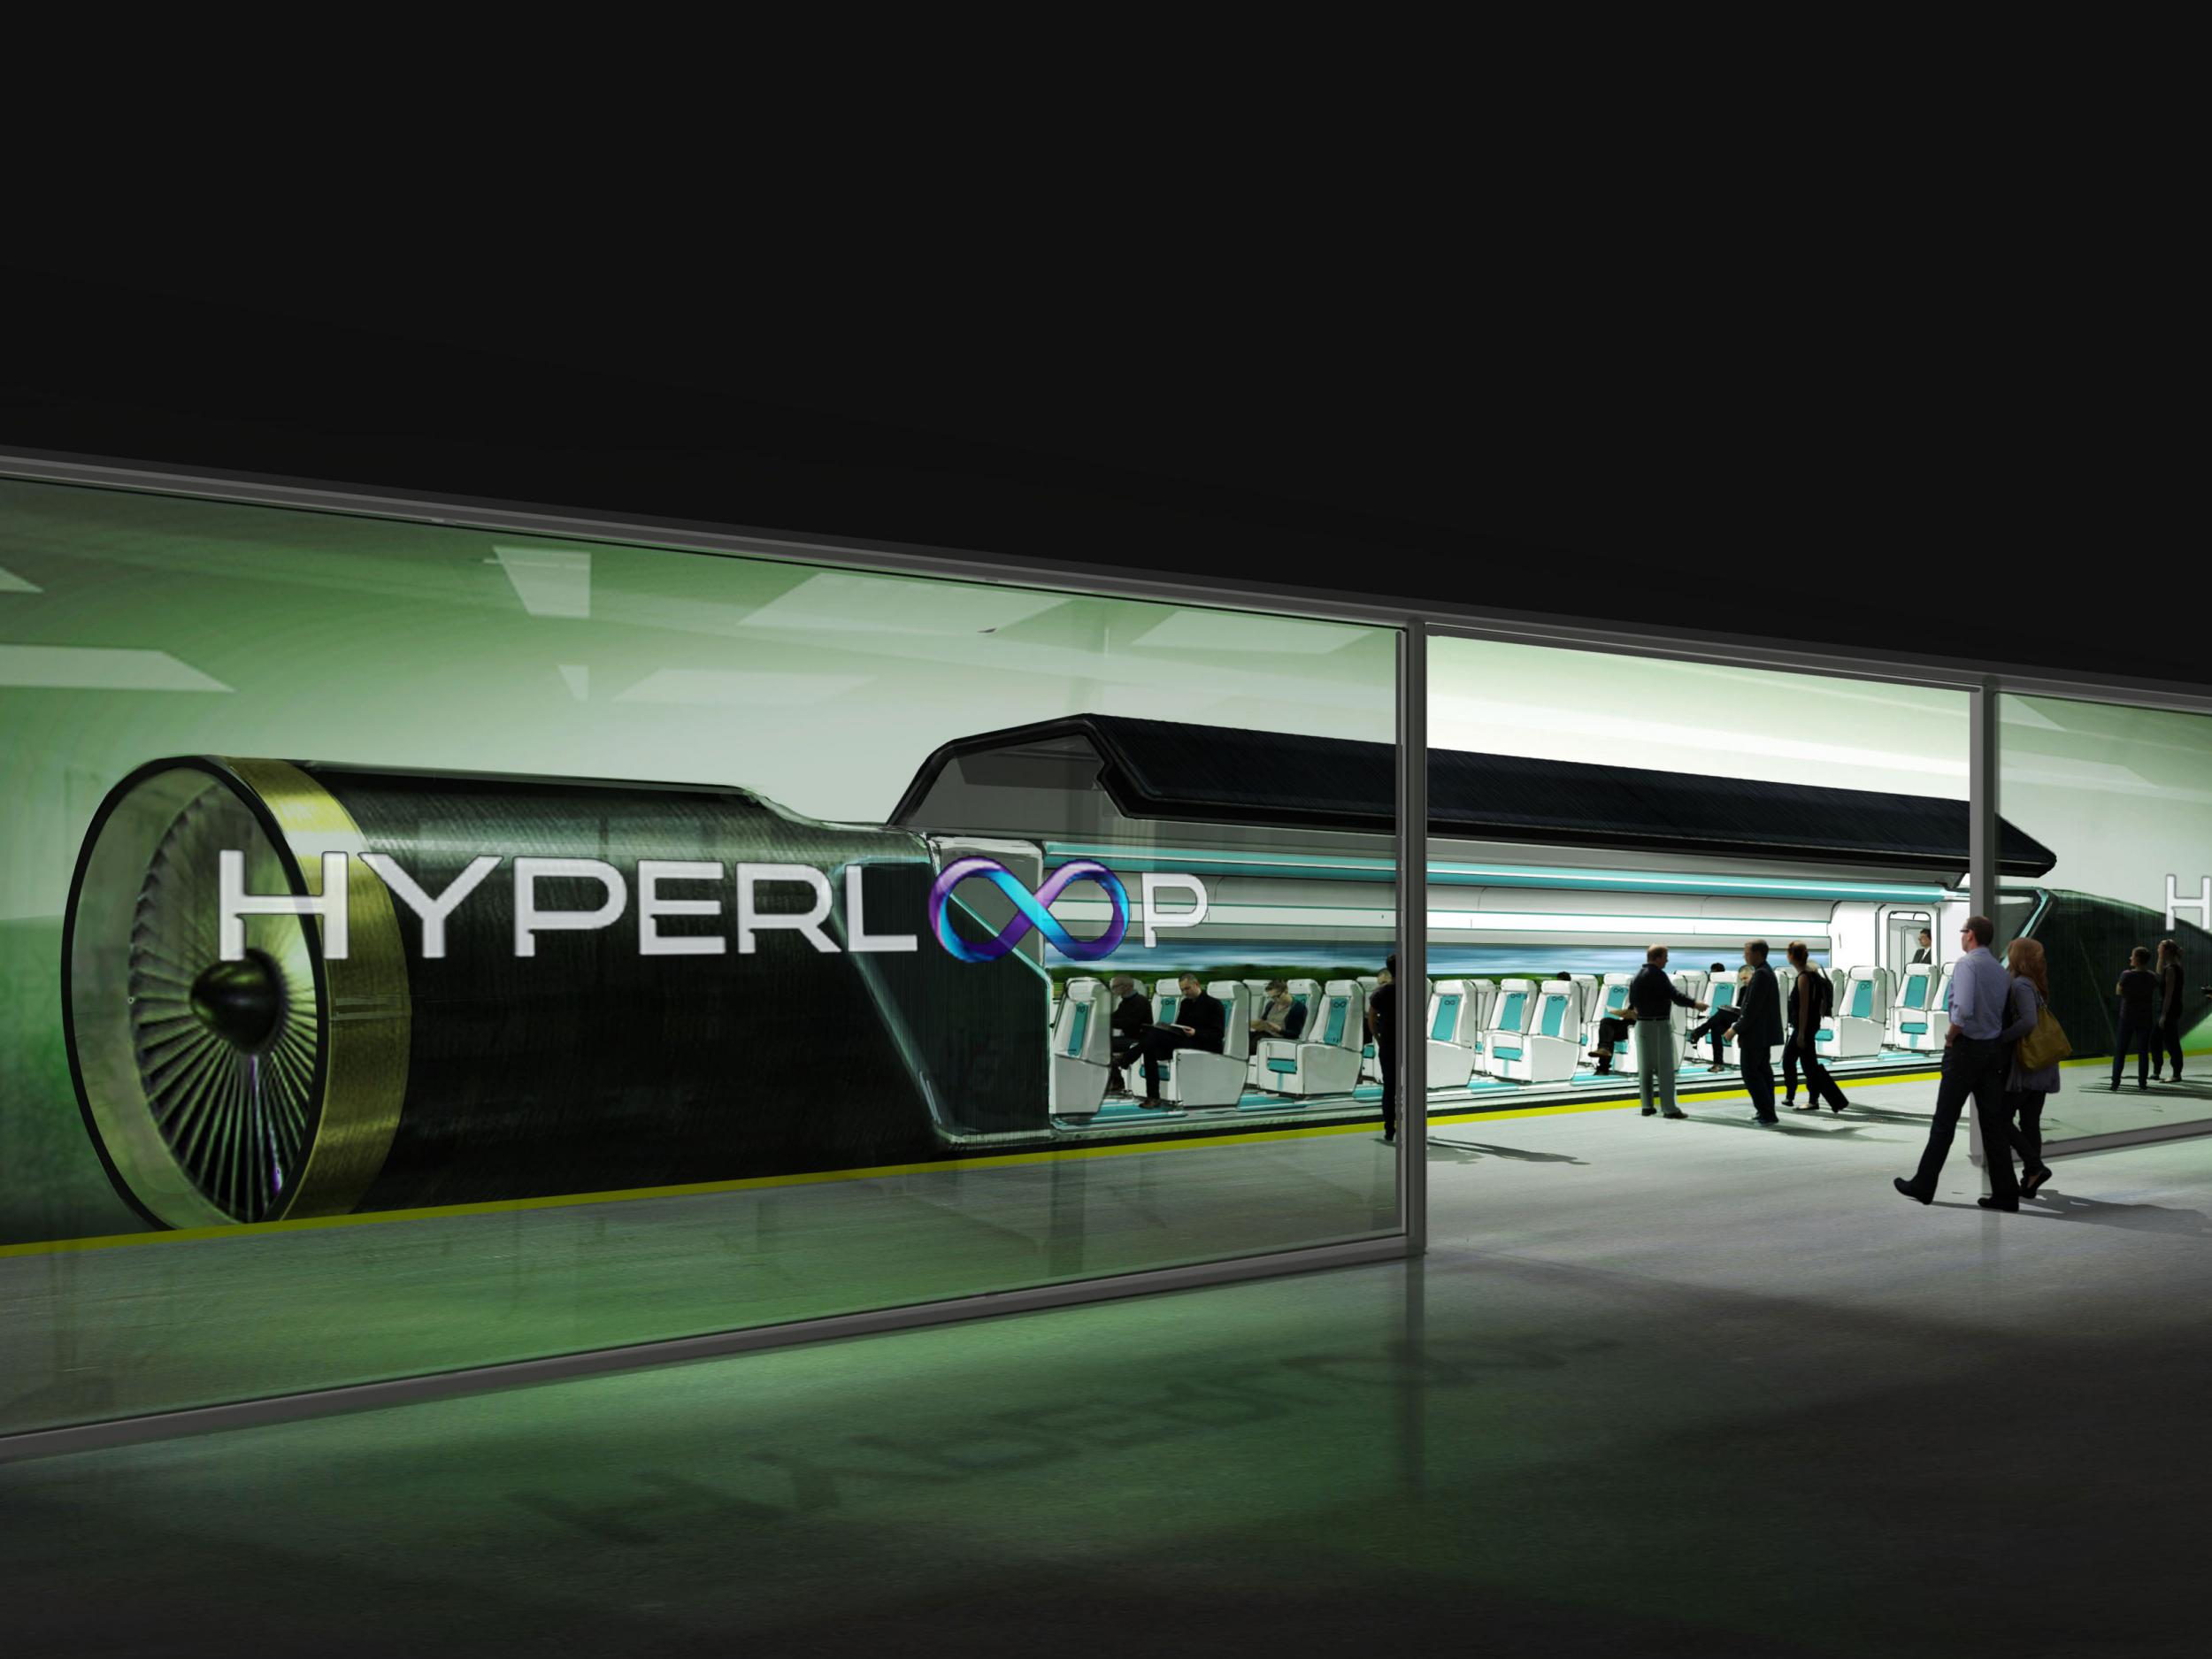 Hyperloopで高速移動